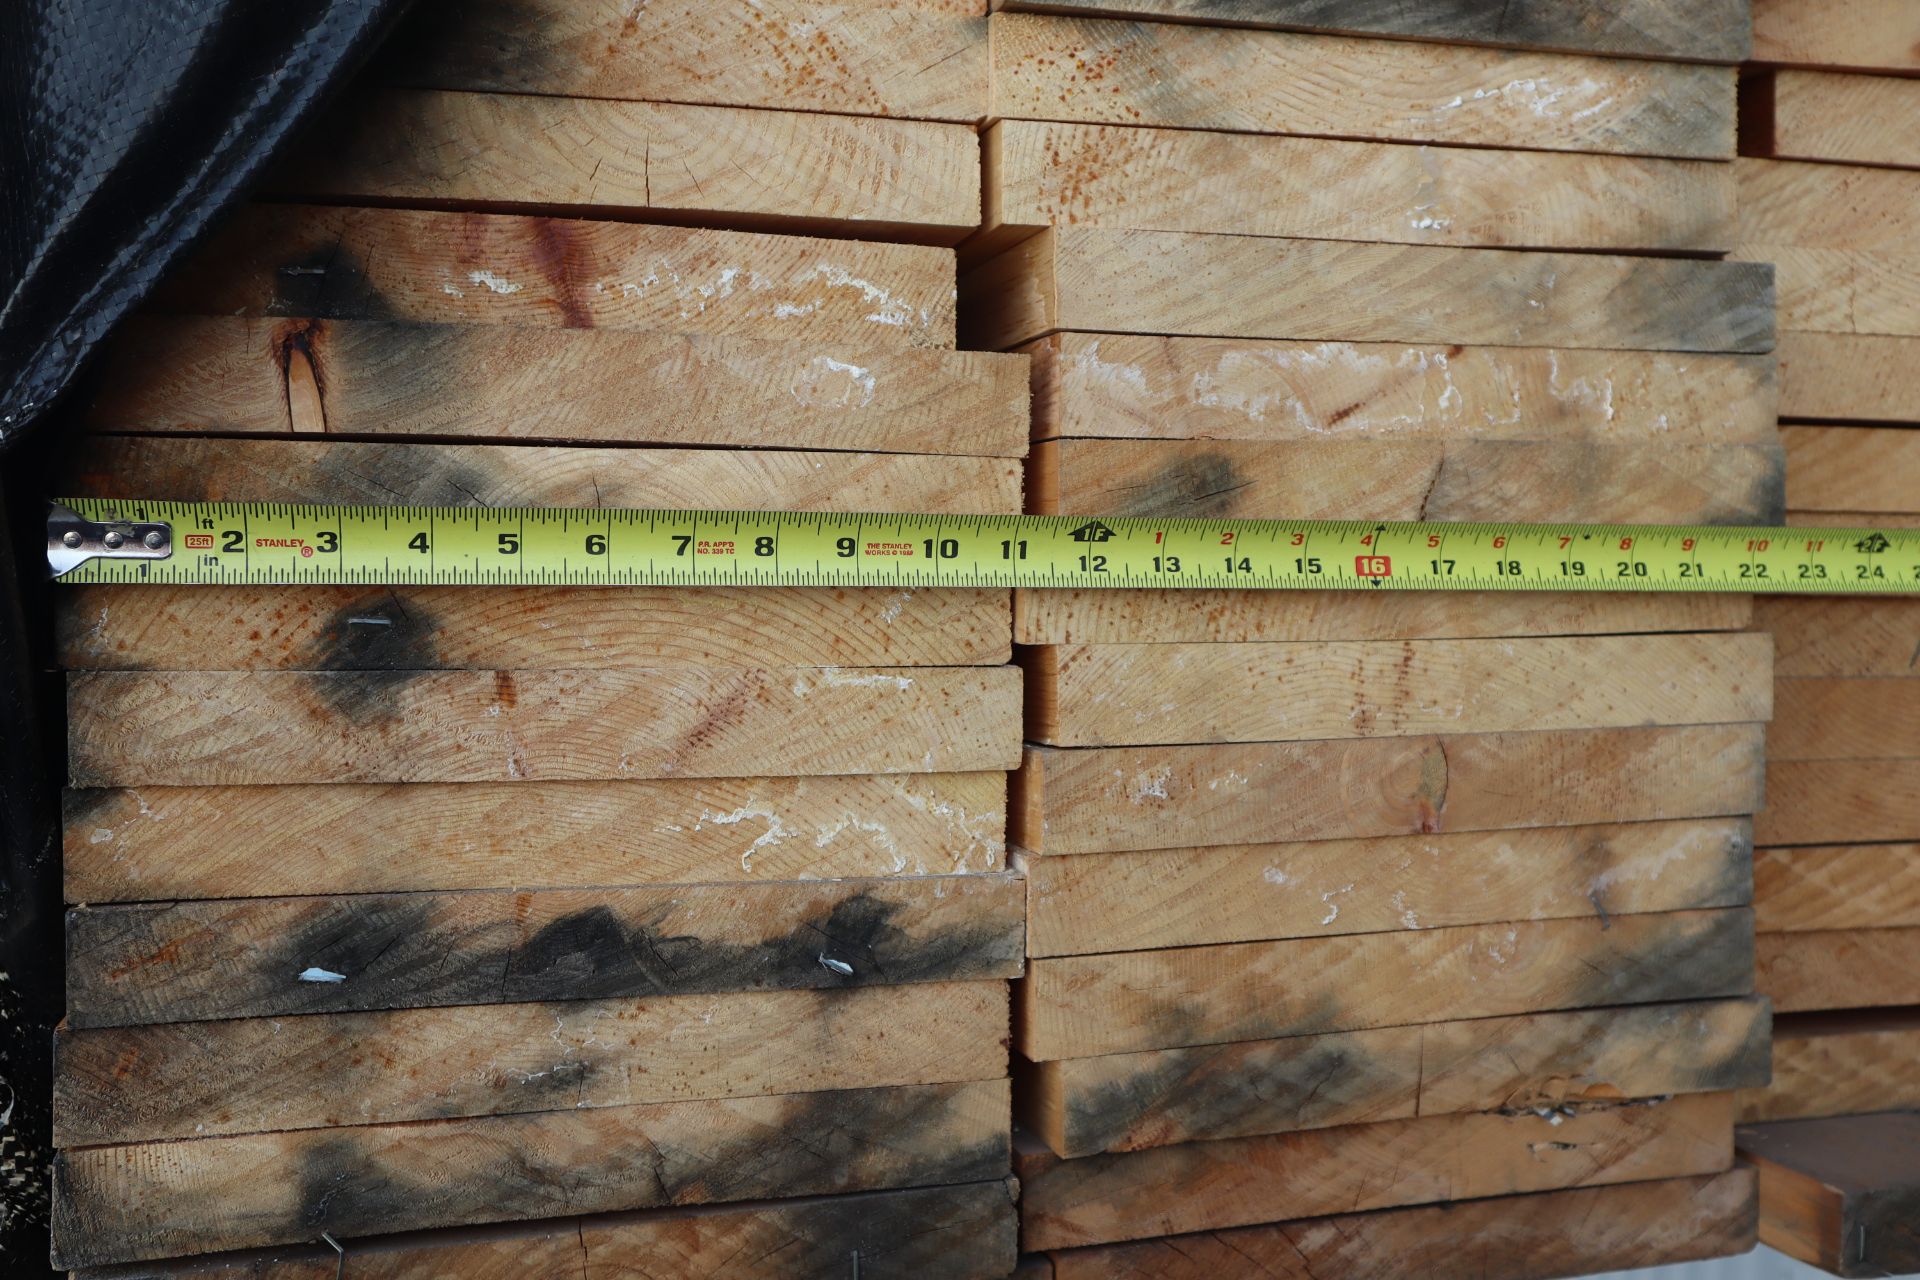 1,360 BFT #2 & Btr Sugar Pine, Kiln Dried, S2S-HV 5/4x12"x16' - Image 6 of 6